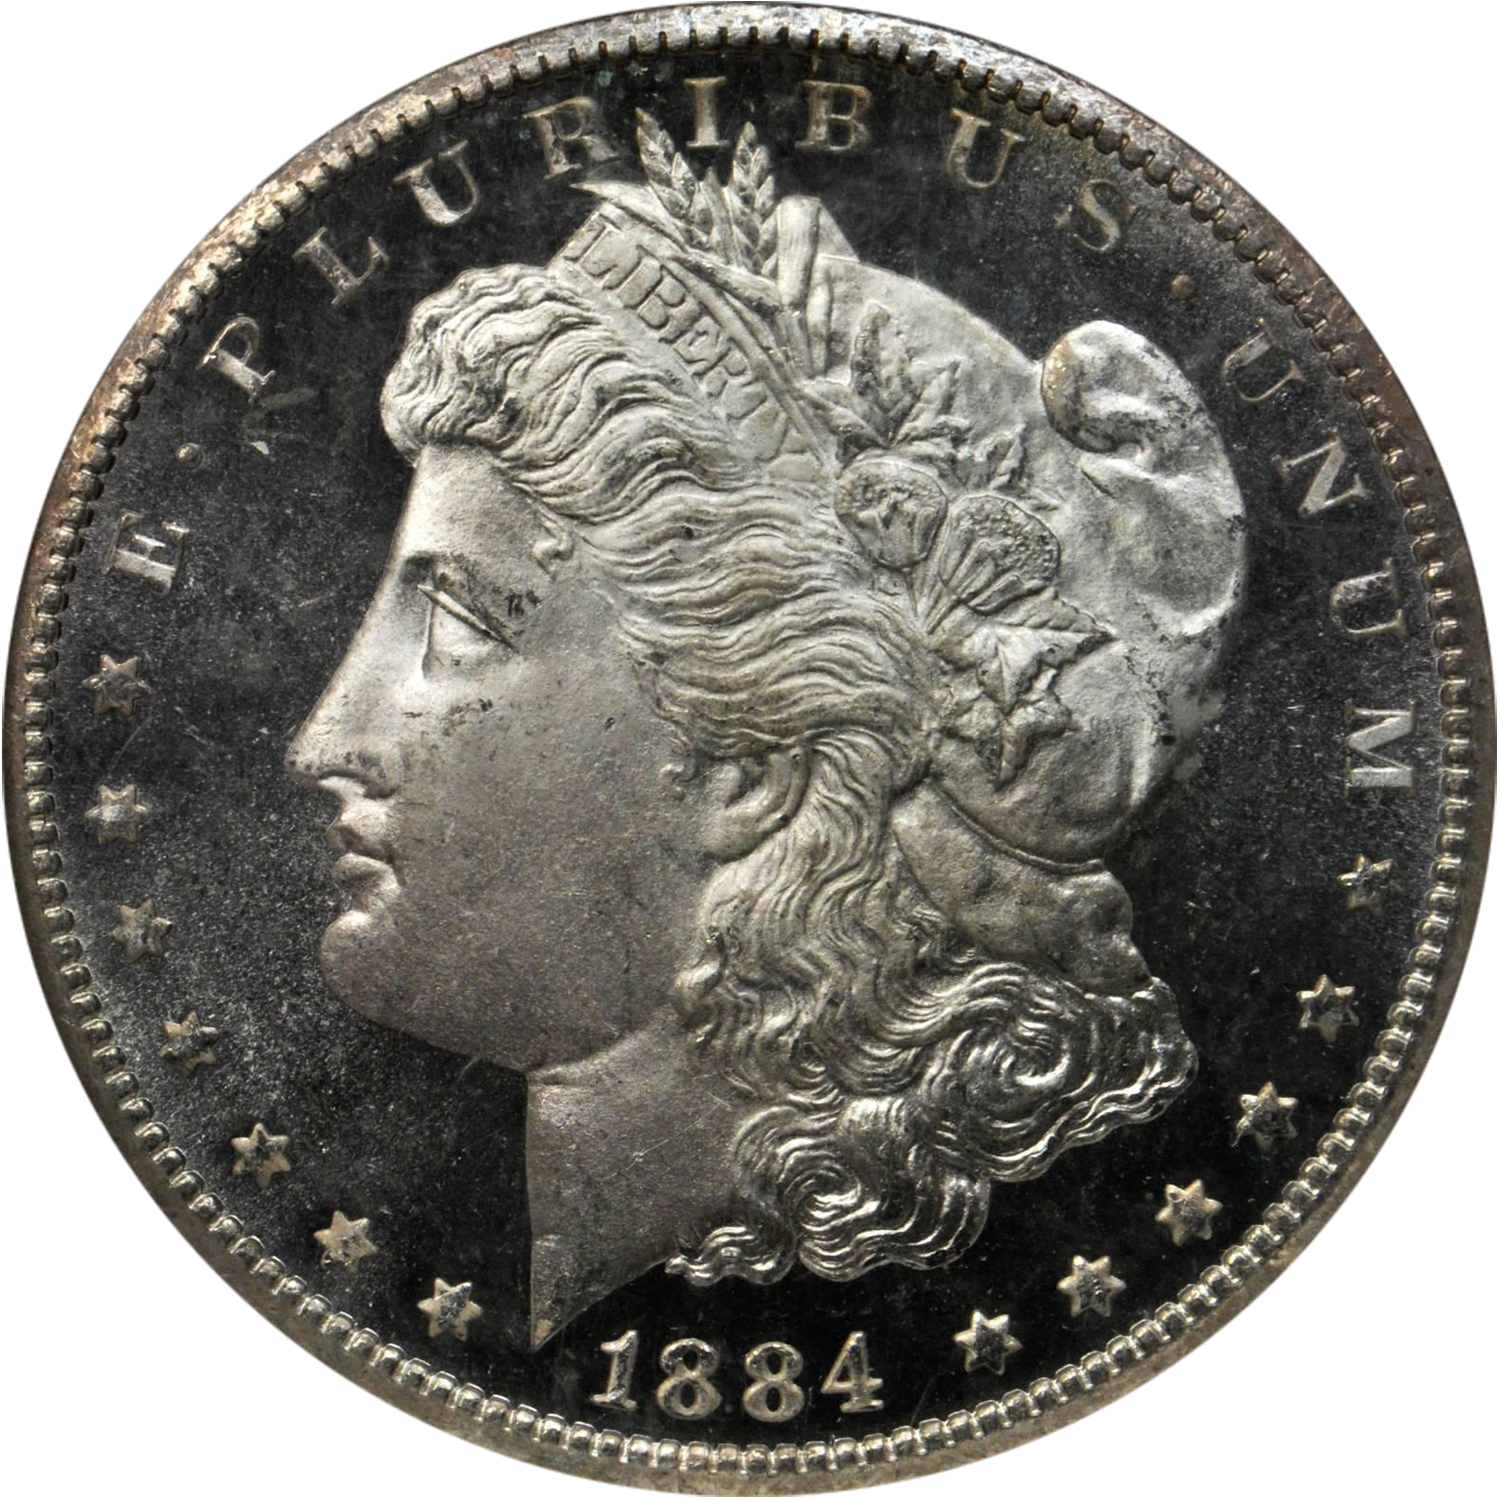 1884 cc gsa morgan dollar value guide